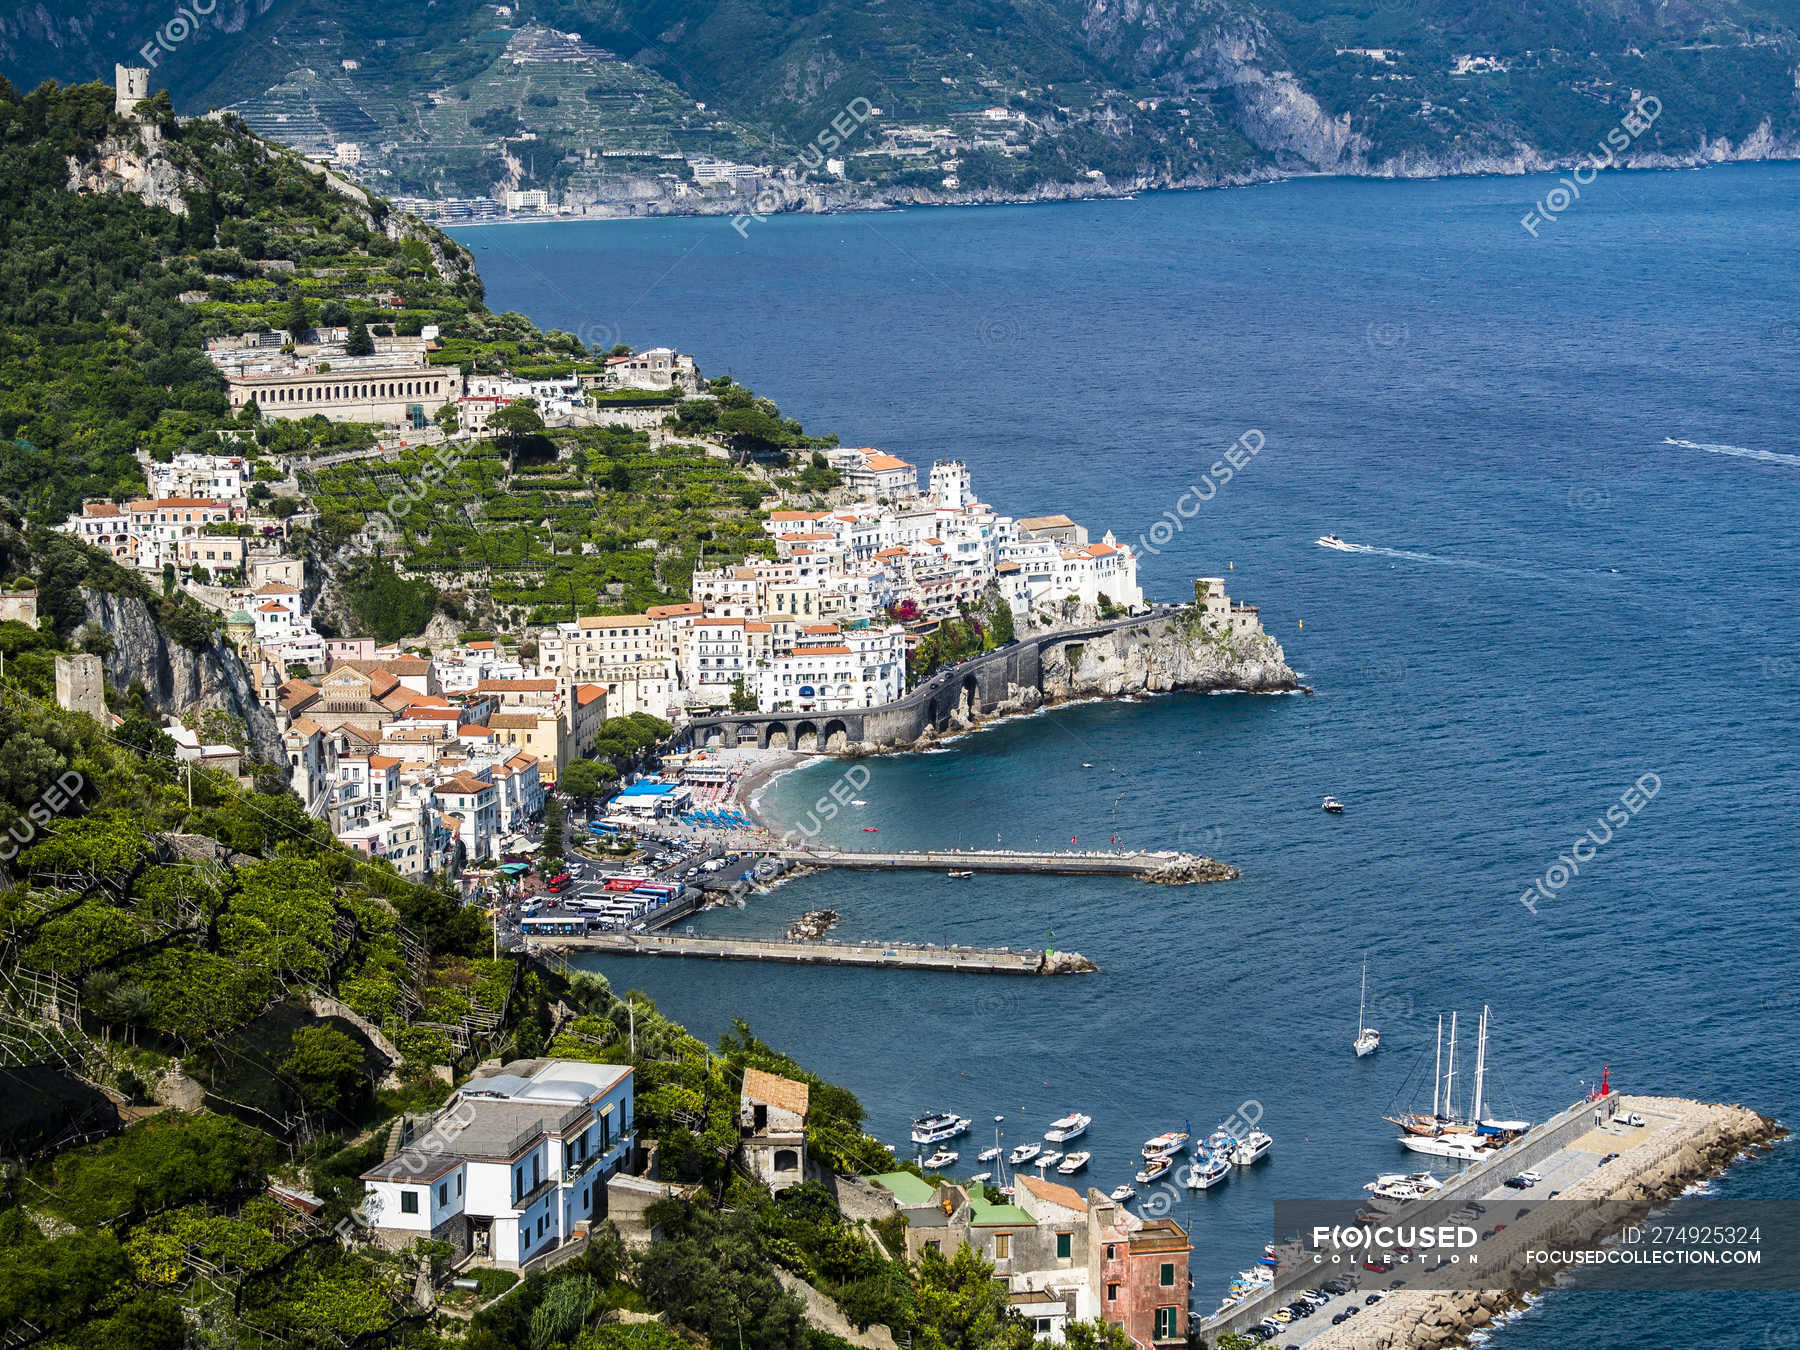 Italy, Campania, Amalfi Sorrento Peninsula, Amalfi — outdoors, world heritage site - Stock Photo | #274925324